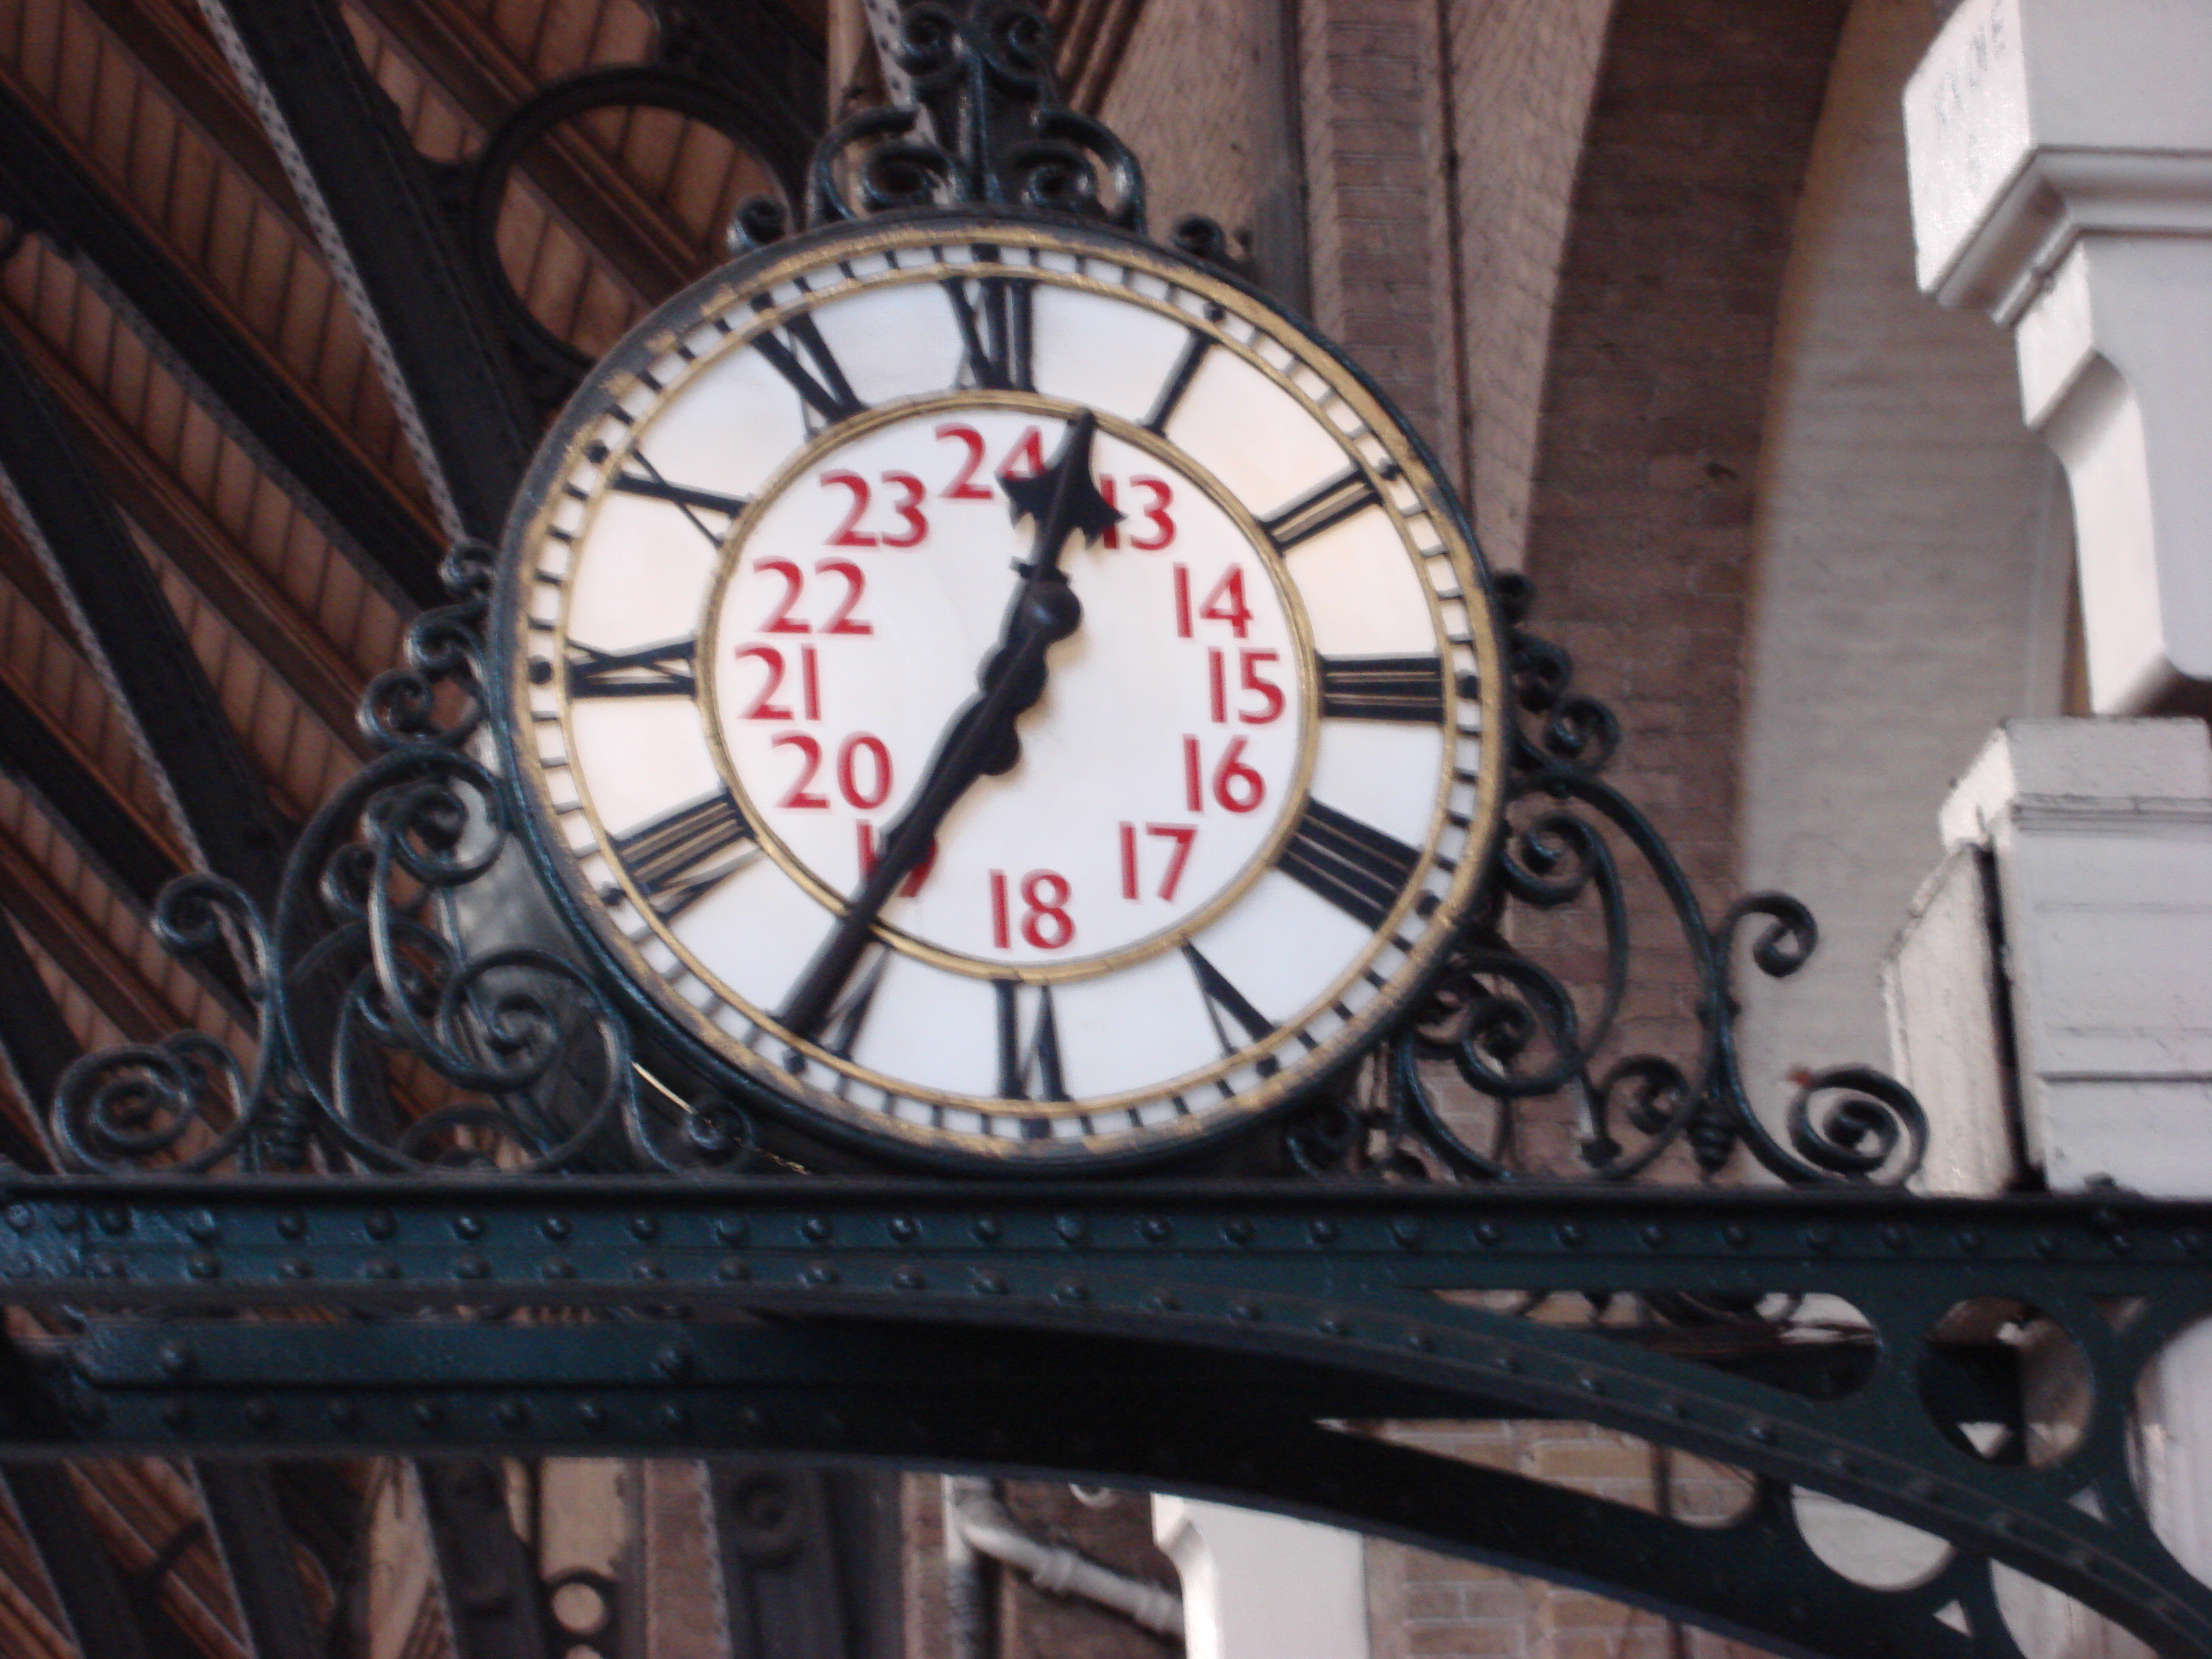 Clock in Kings Cross railway station